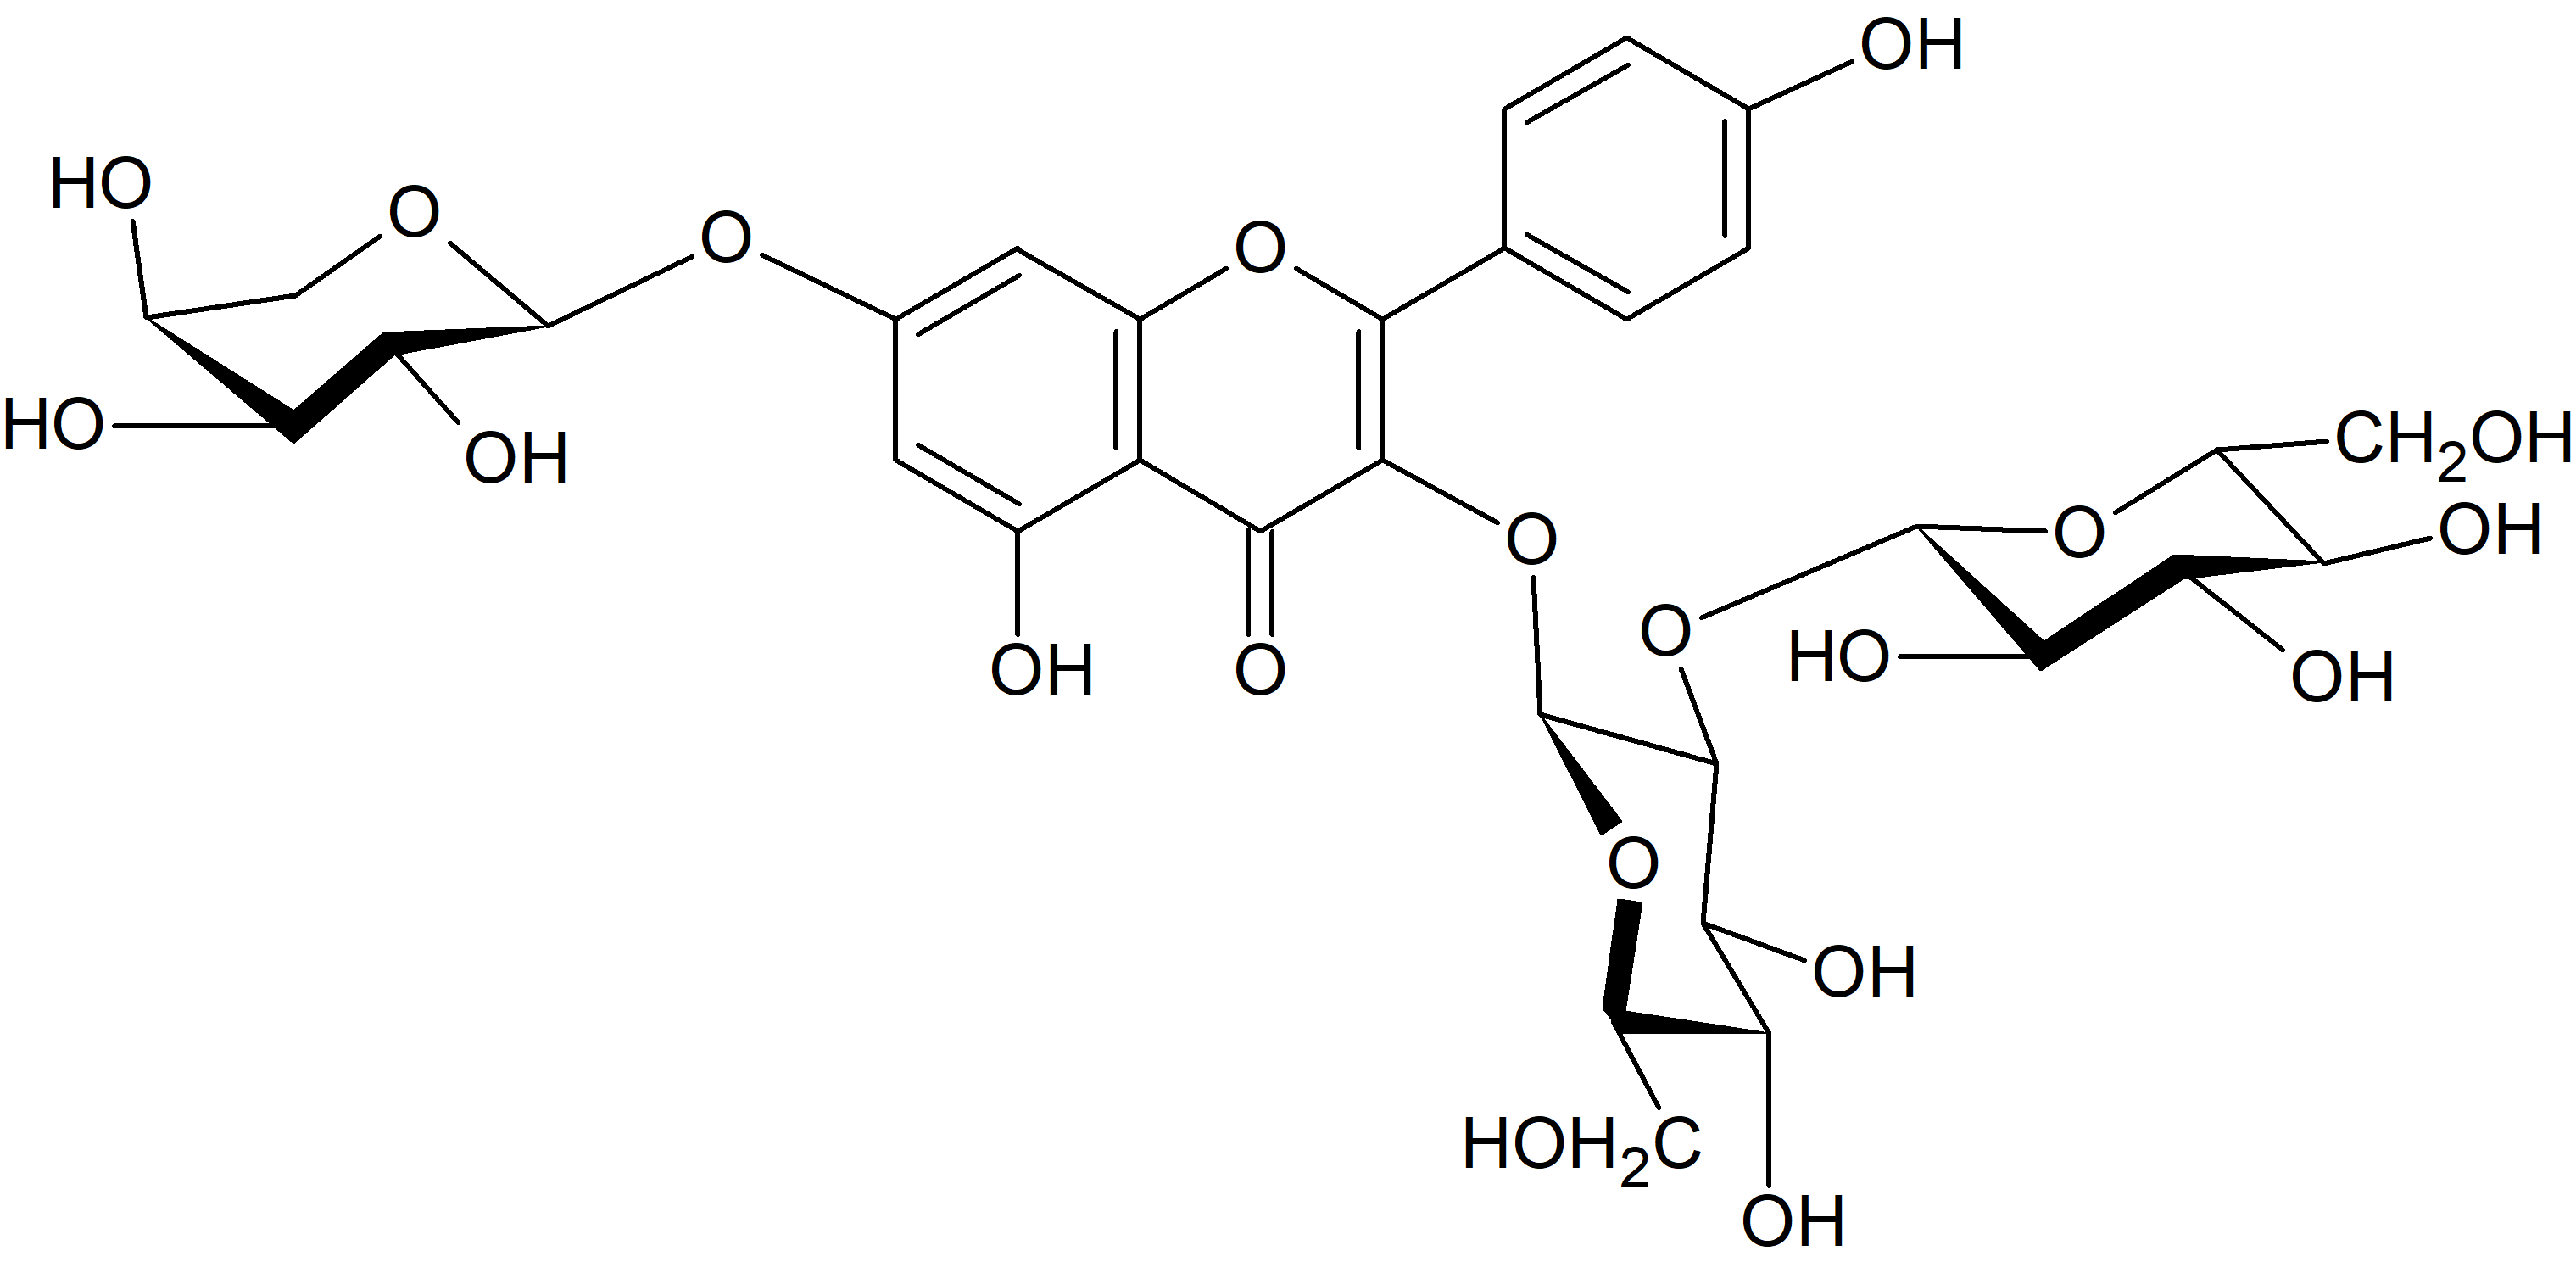 Kaempferol 3-O-sophoroside-7-O-arabinoside